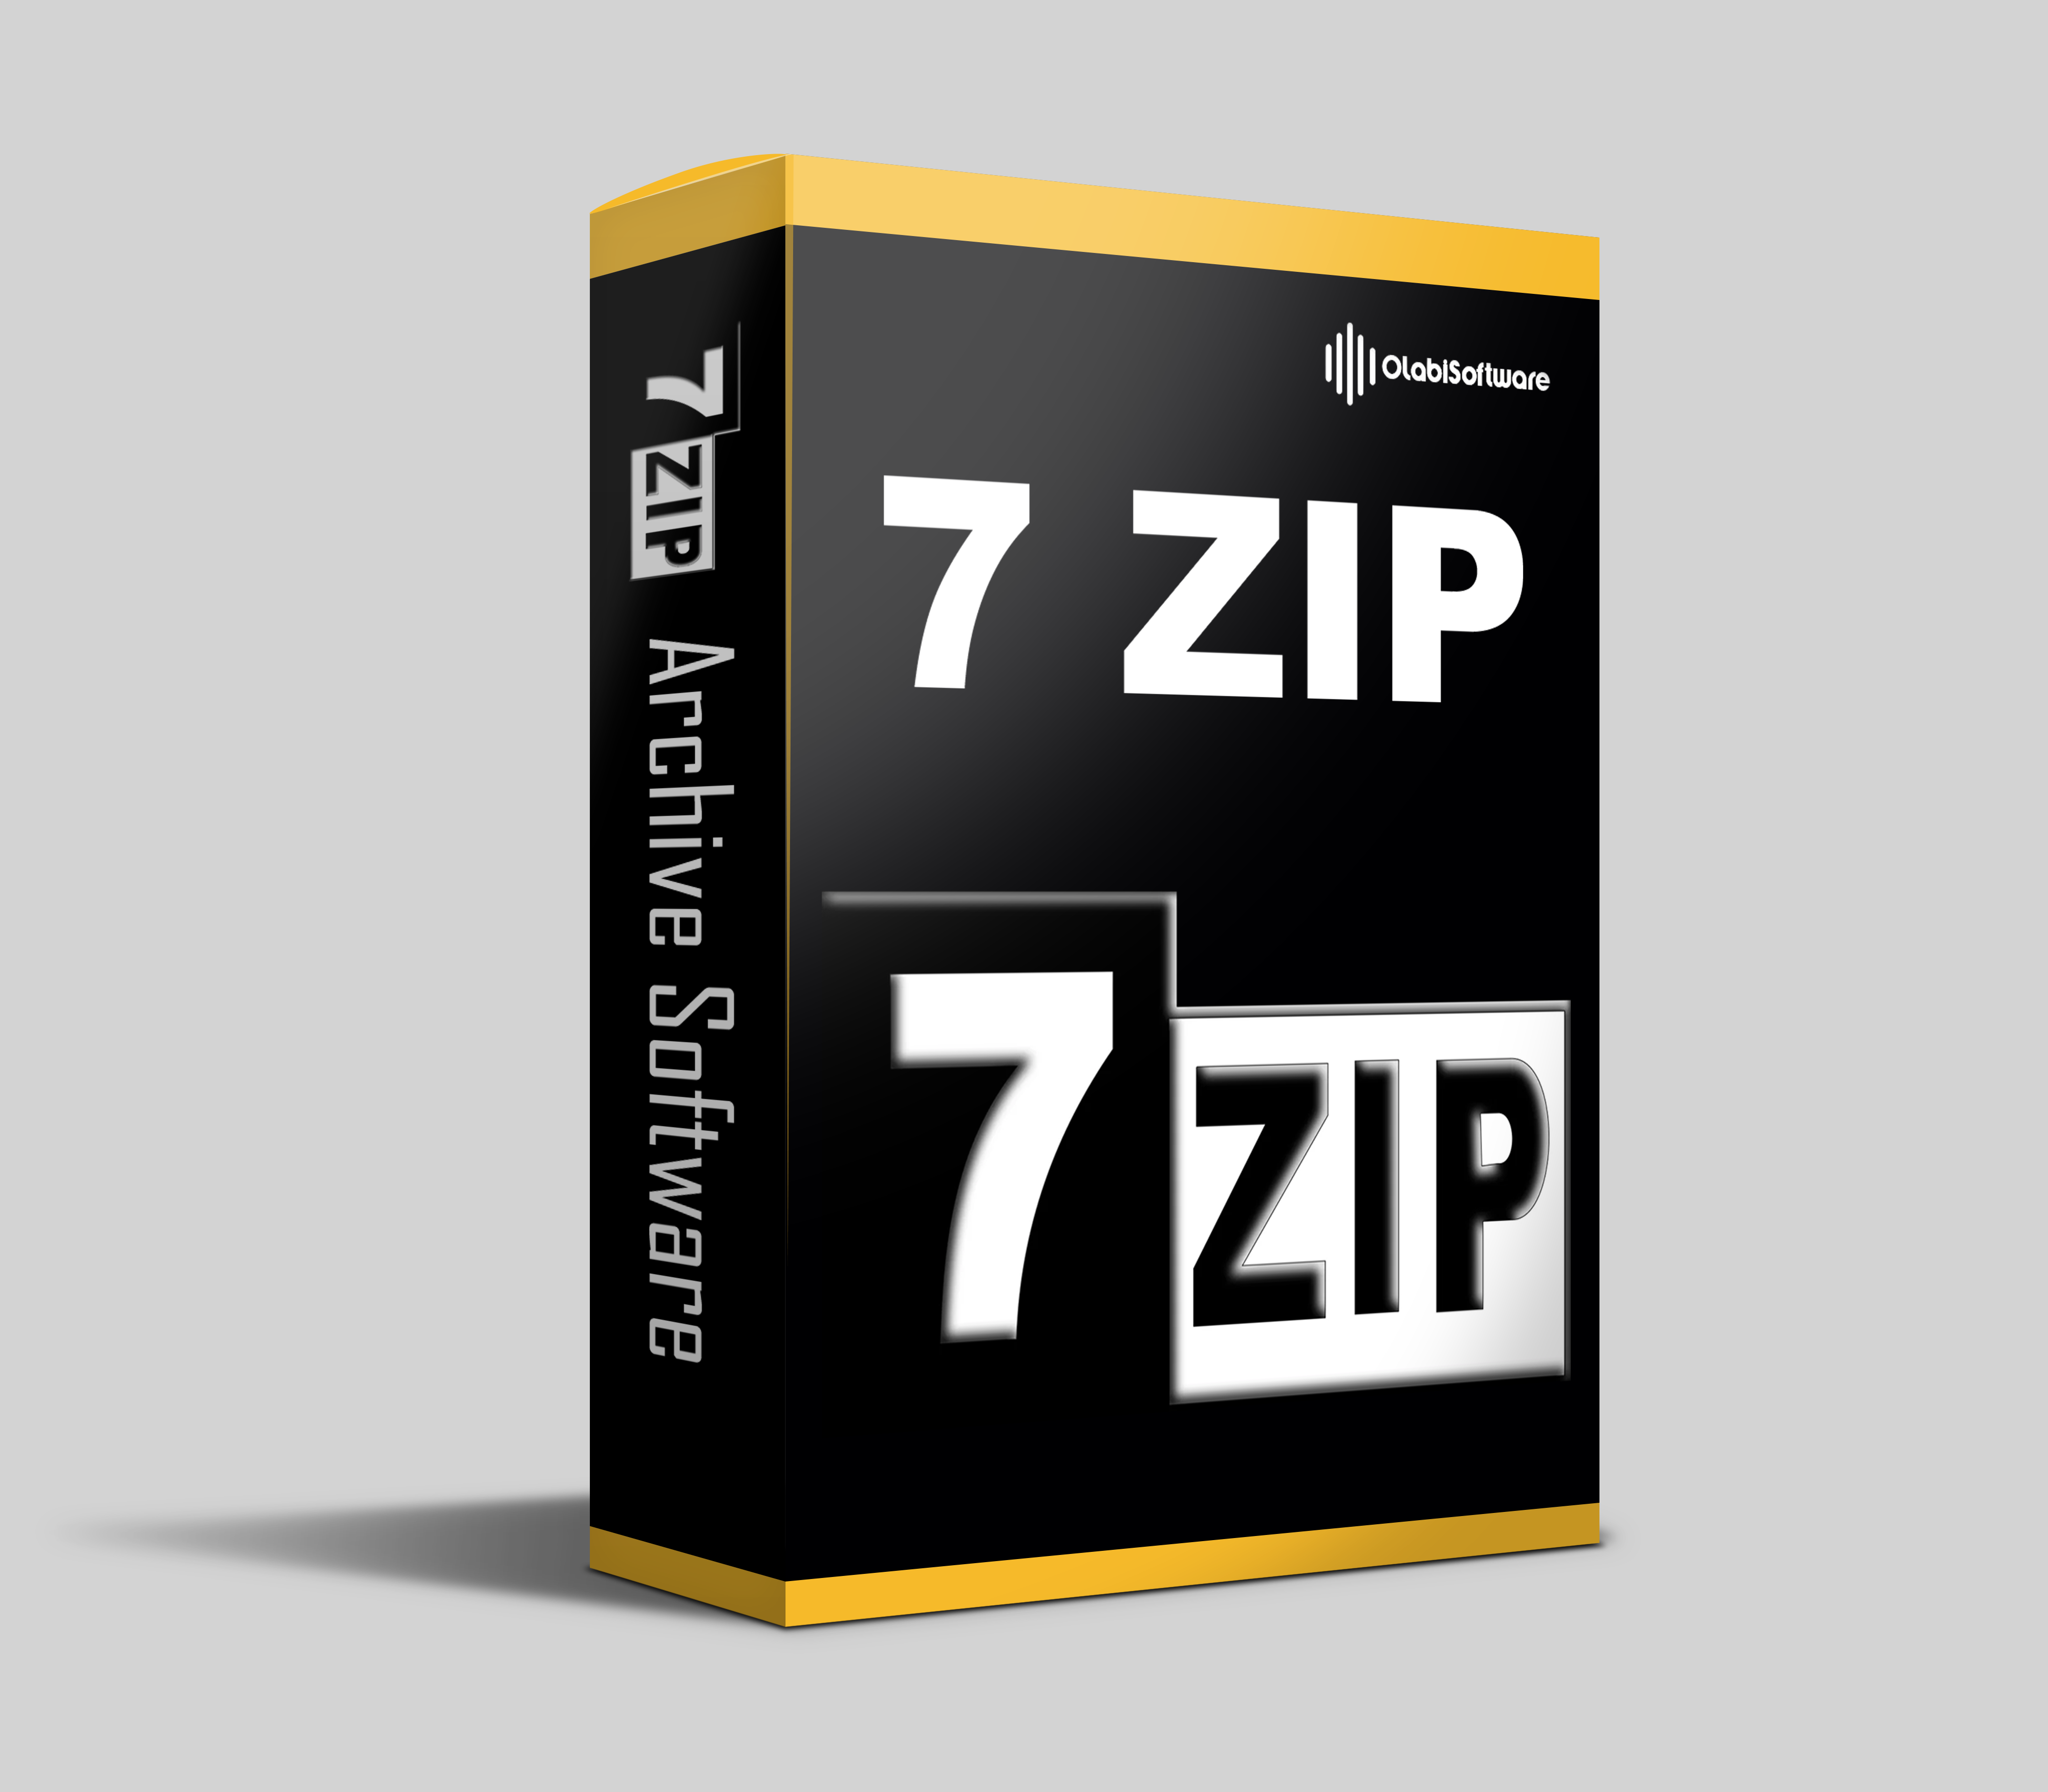 7 Zip - Olabisoft